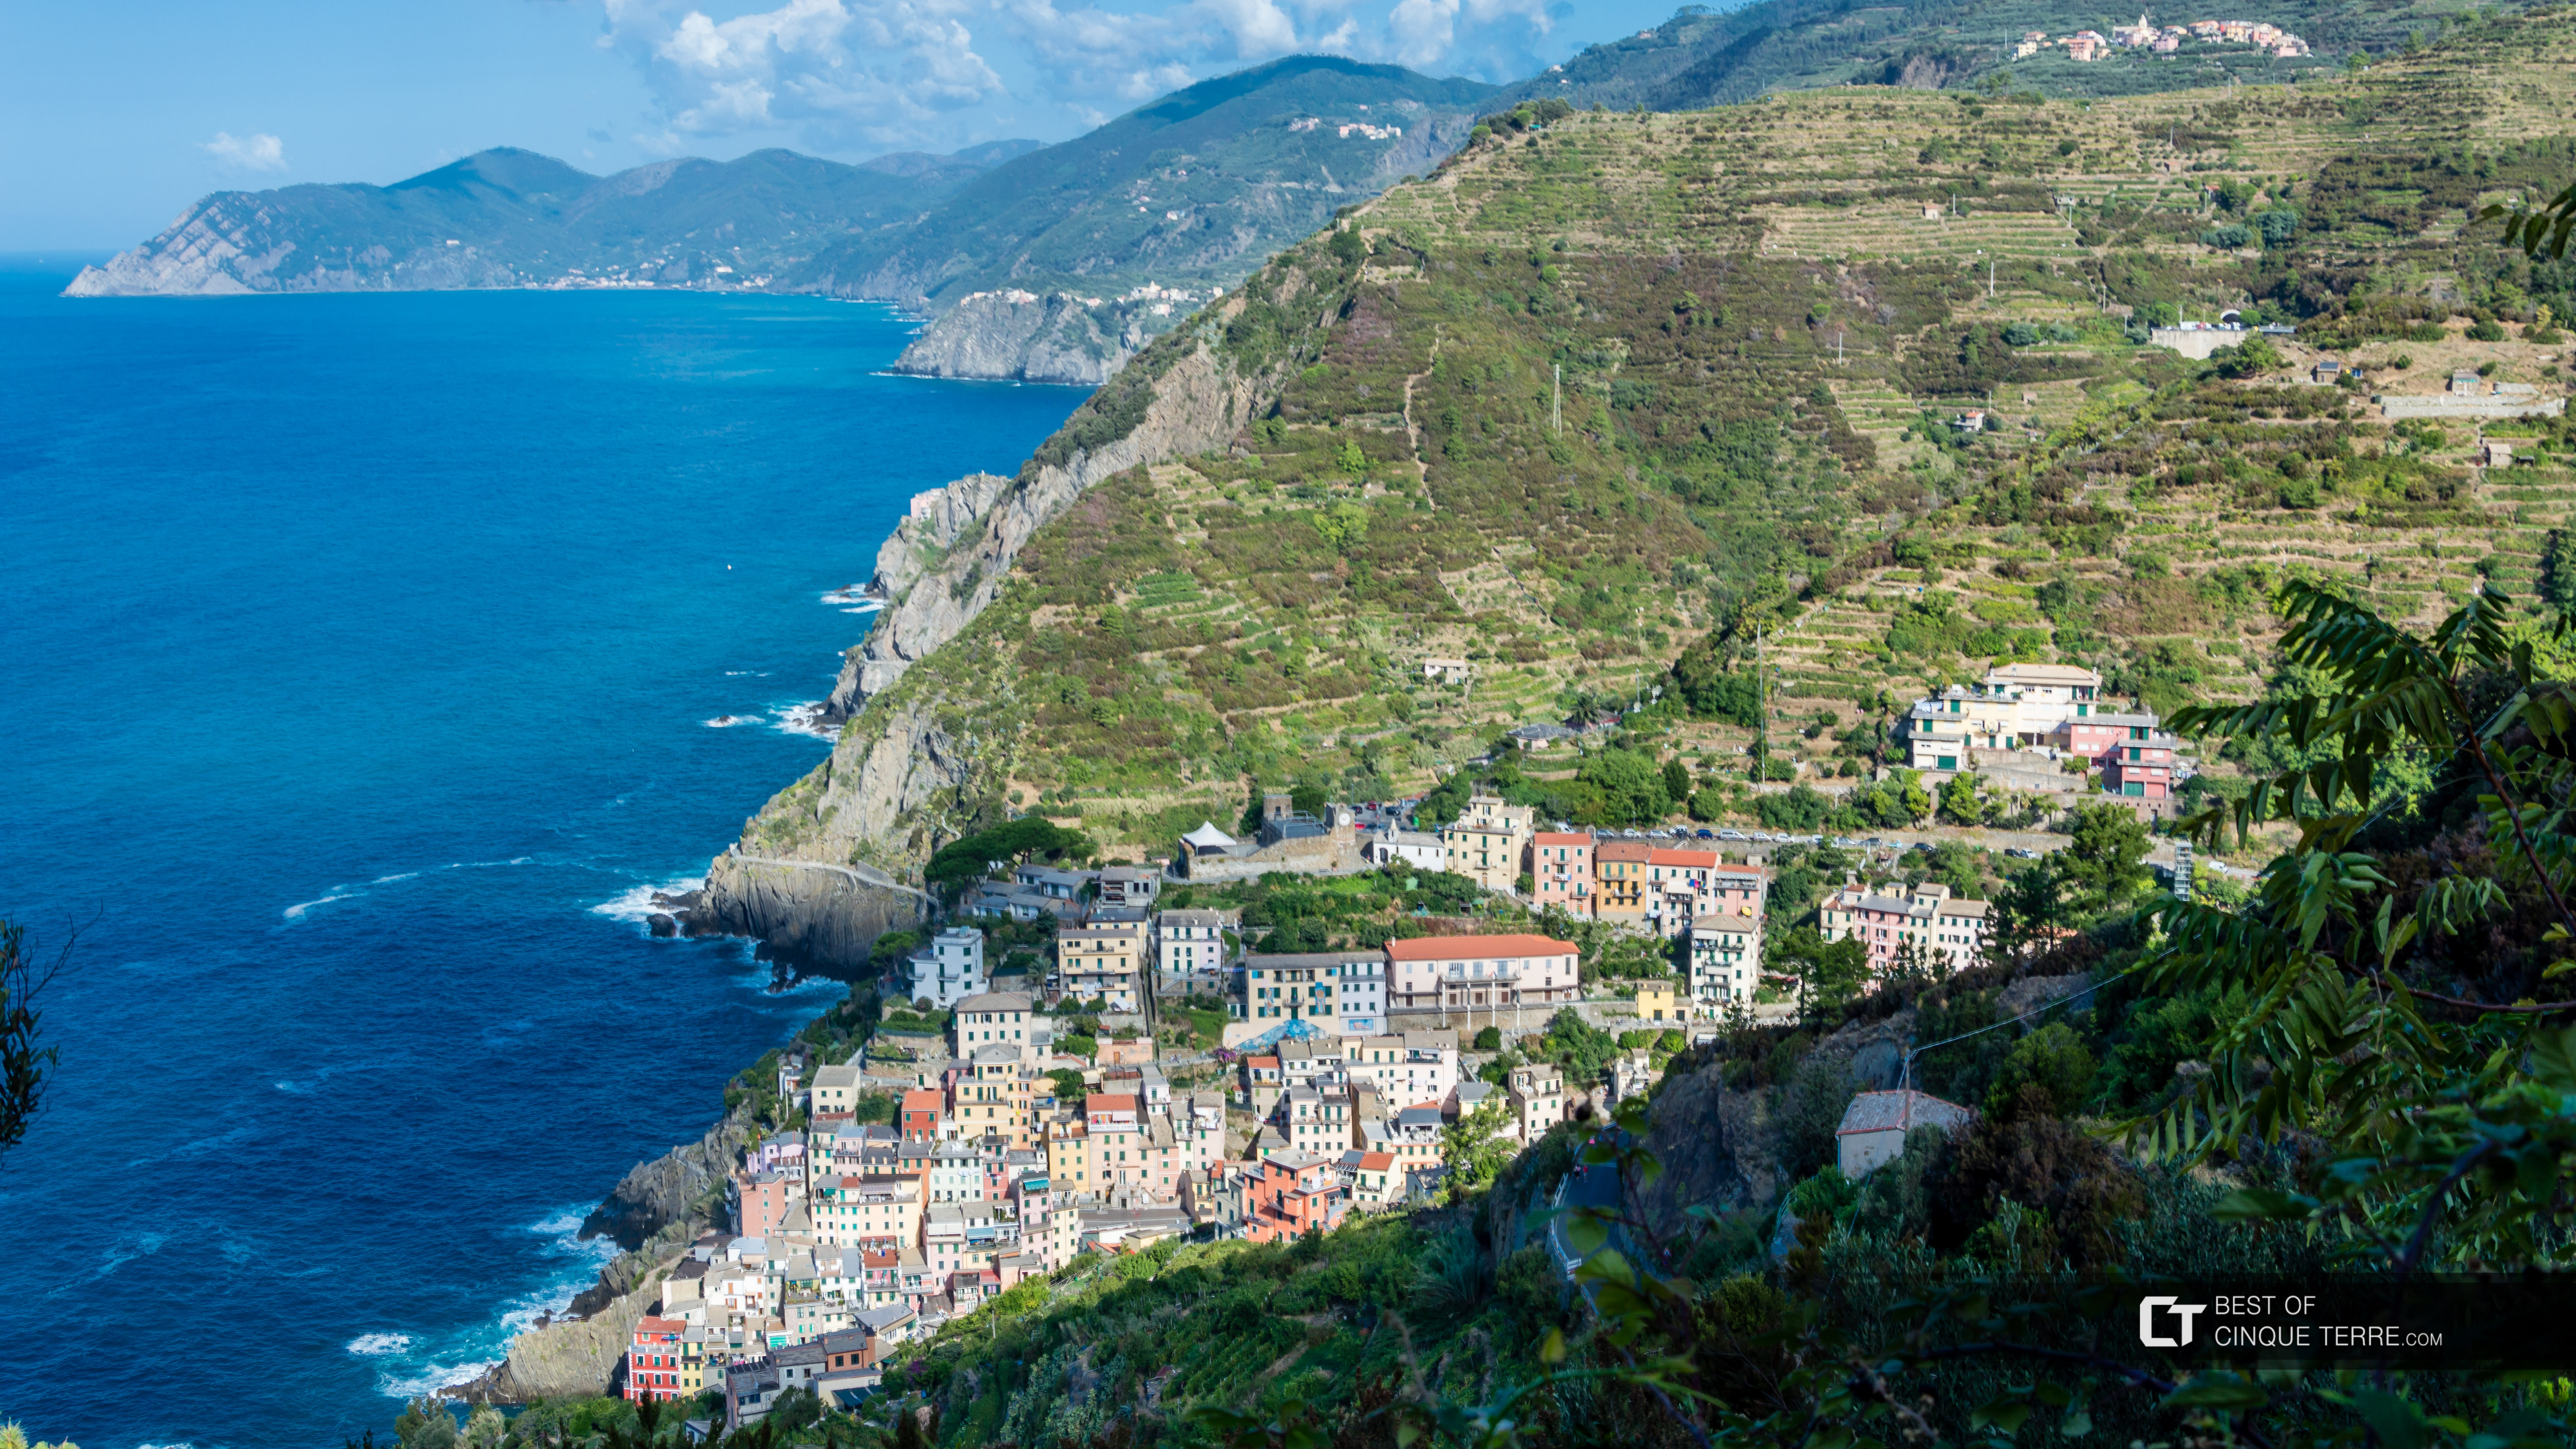 Vue du village depuis le sentier qui conduit au sanctuaire de Montenero, Riomaggiore, Cinque Terre, Italie